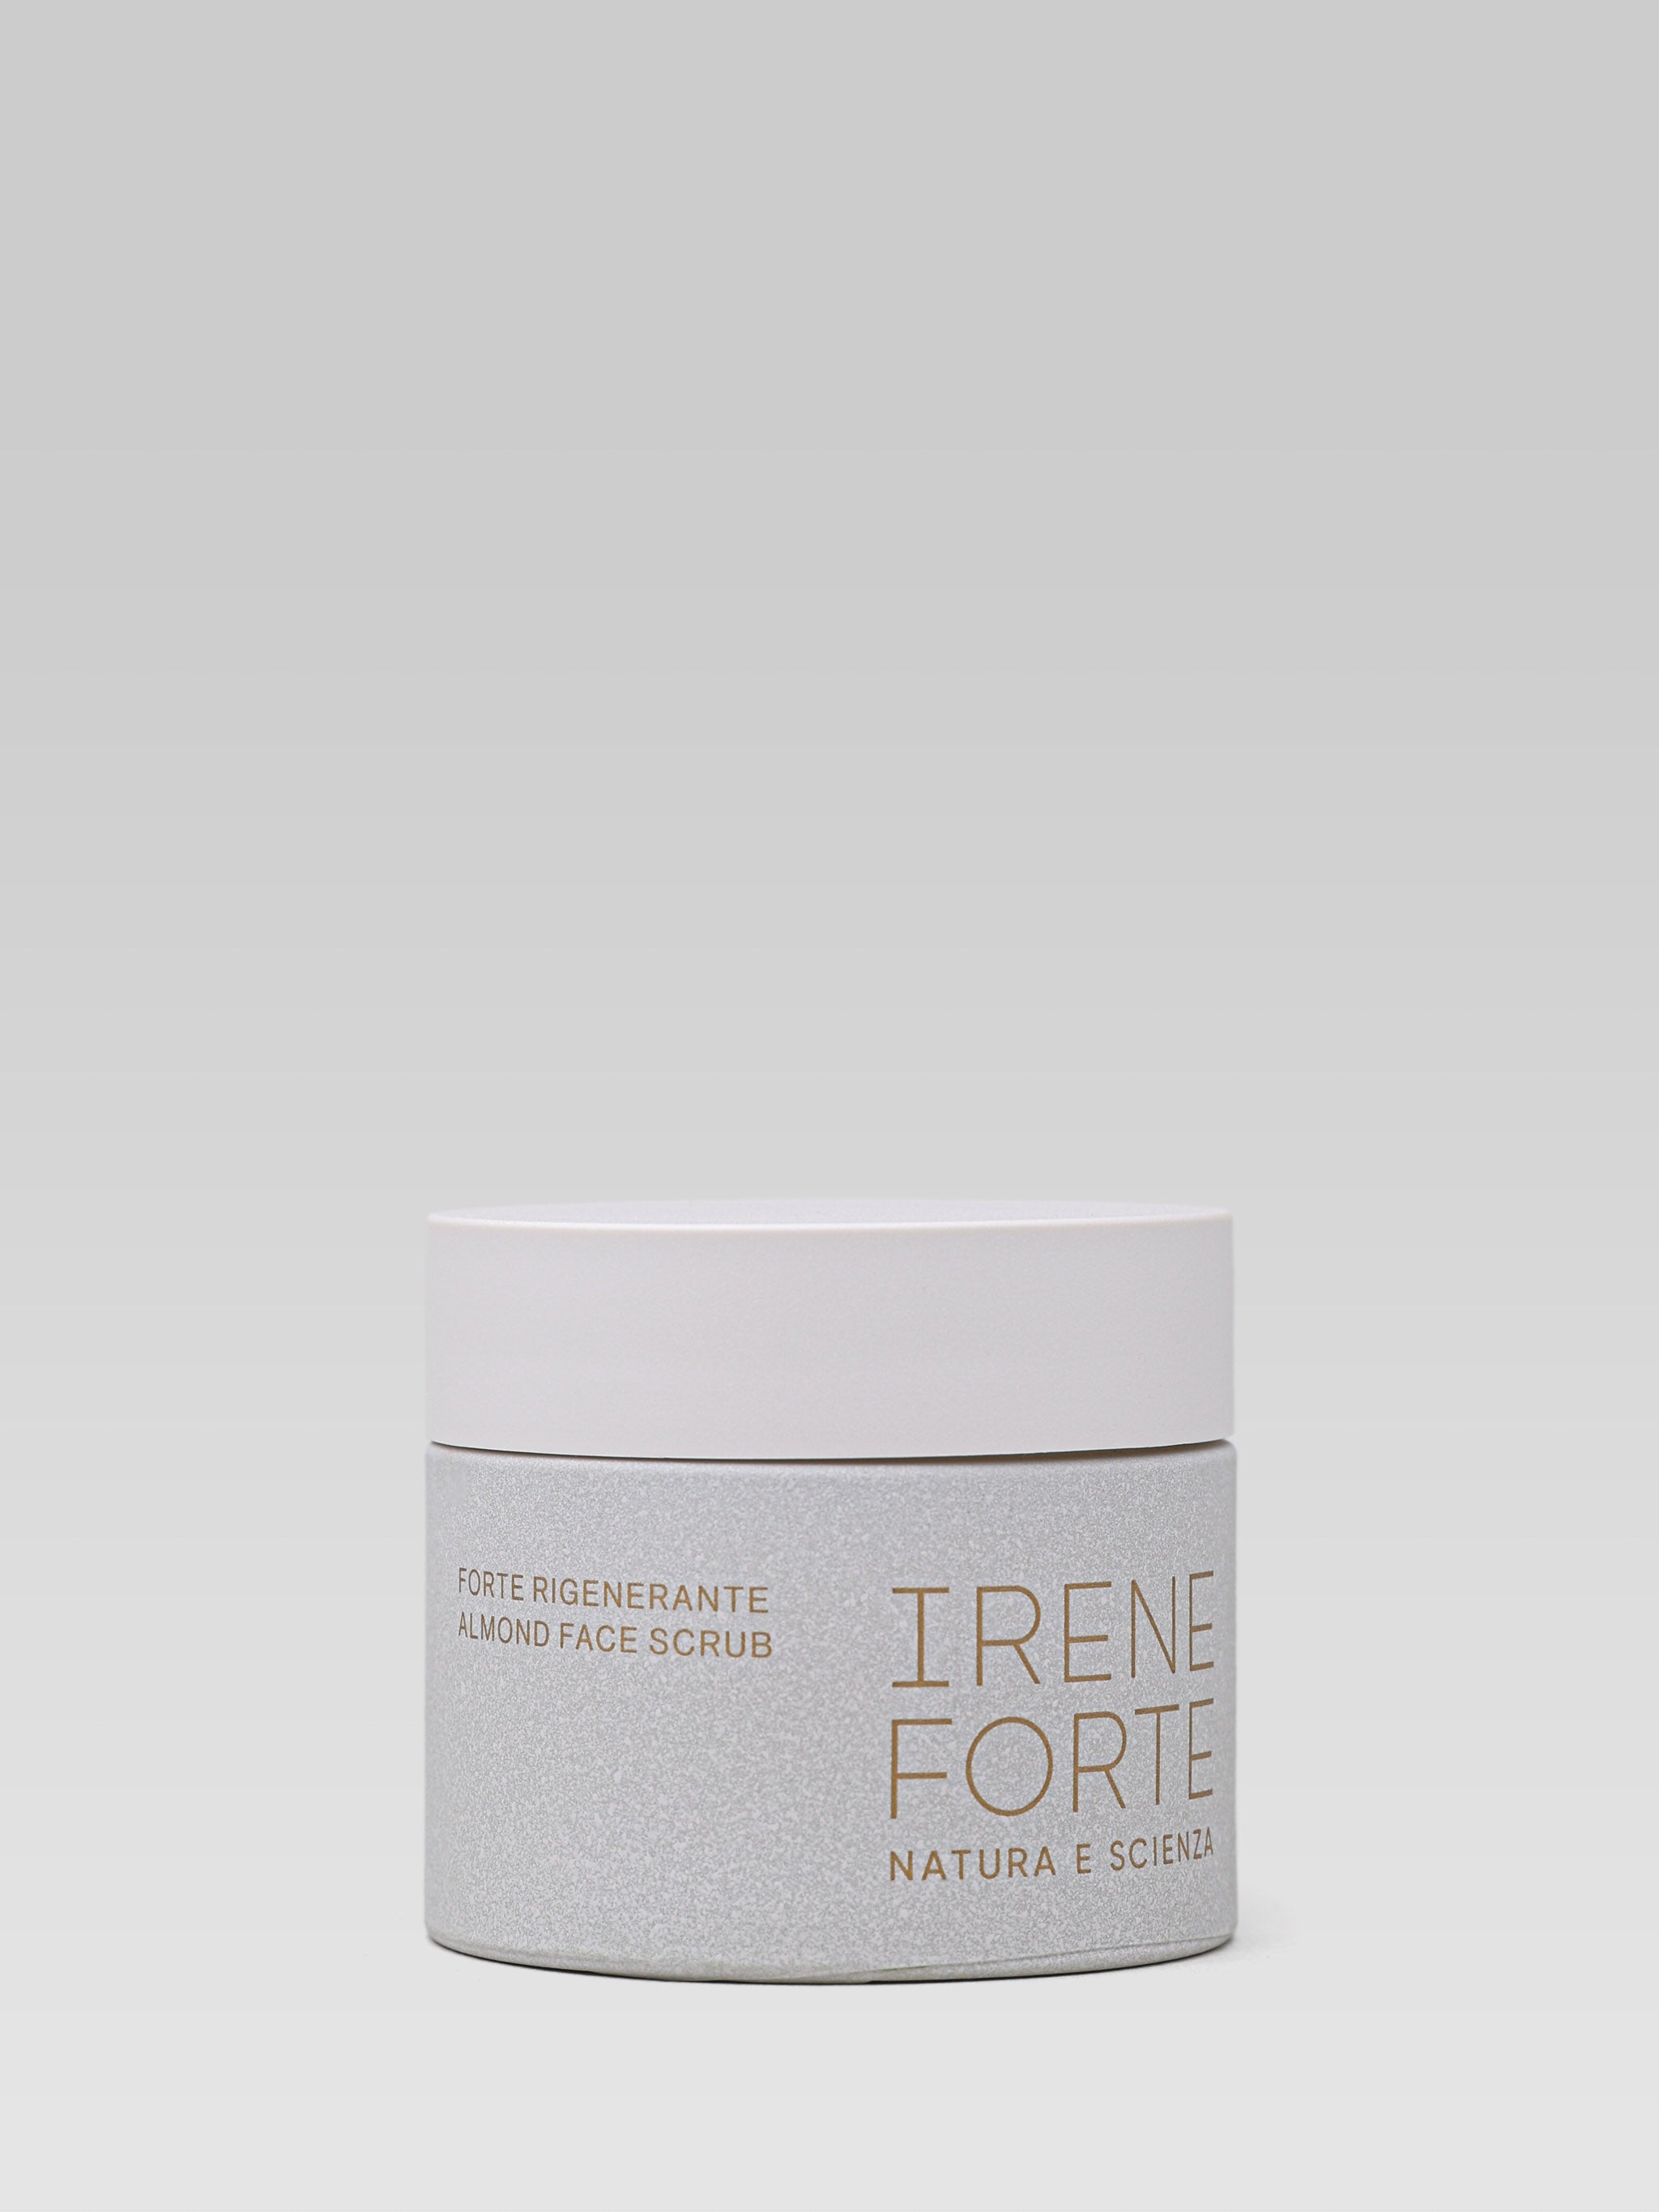 Irene Forte Almond Face Scrub product shot